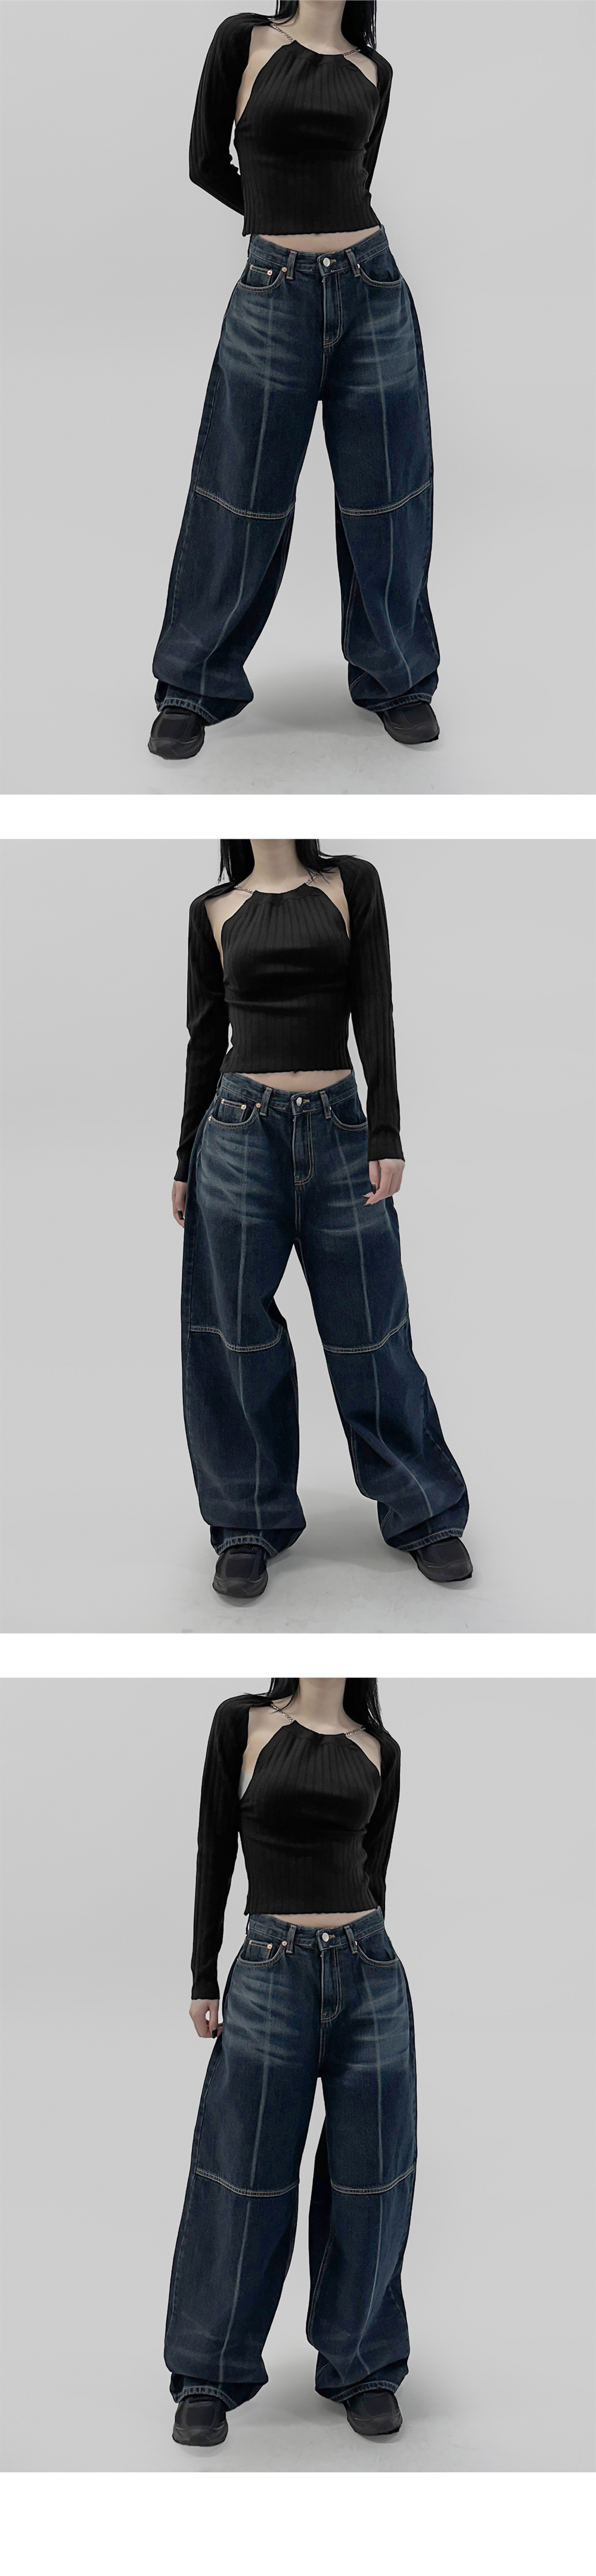 suspenders skirt/pants model image-S1L4